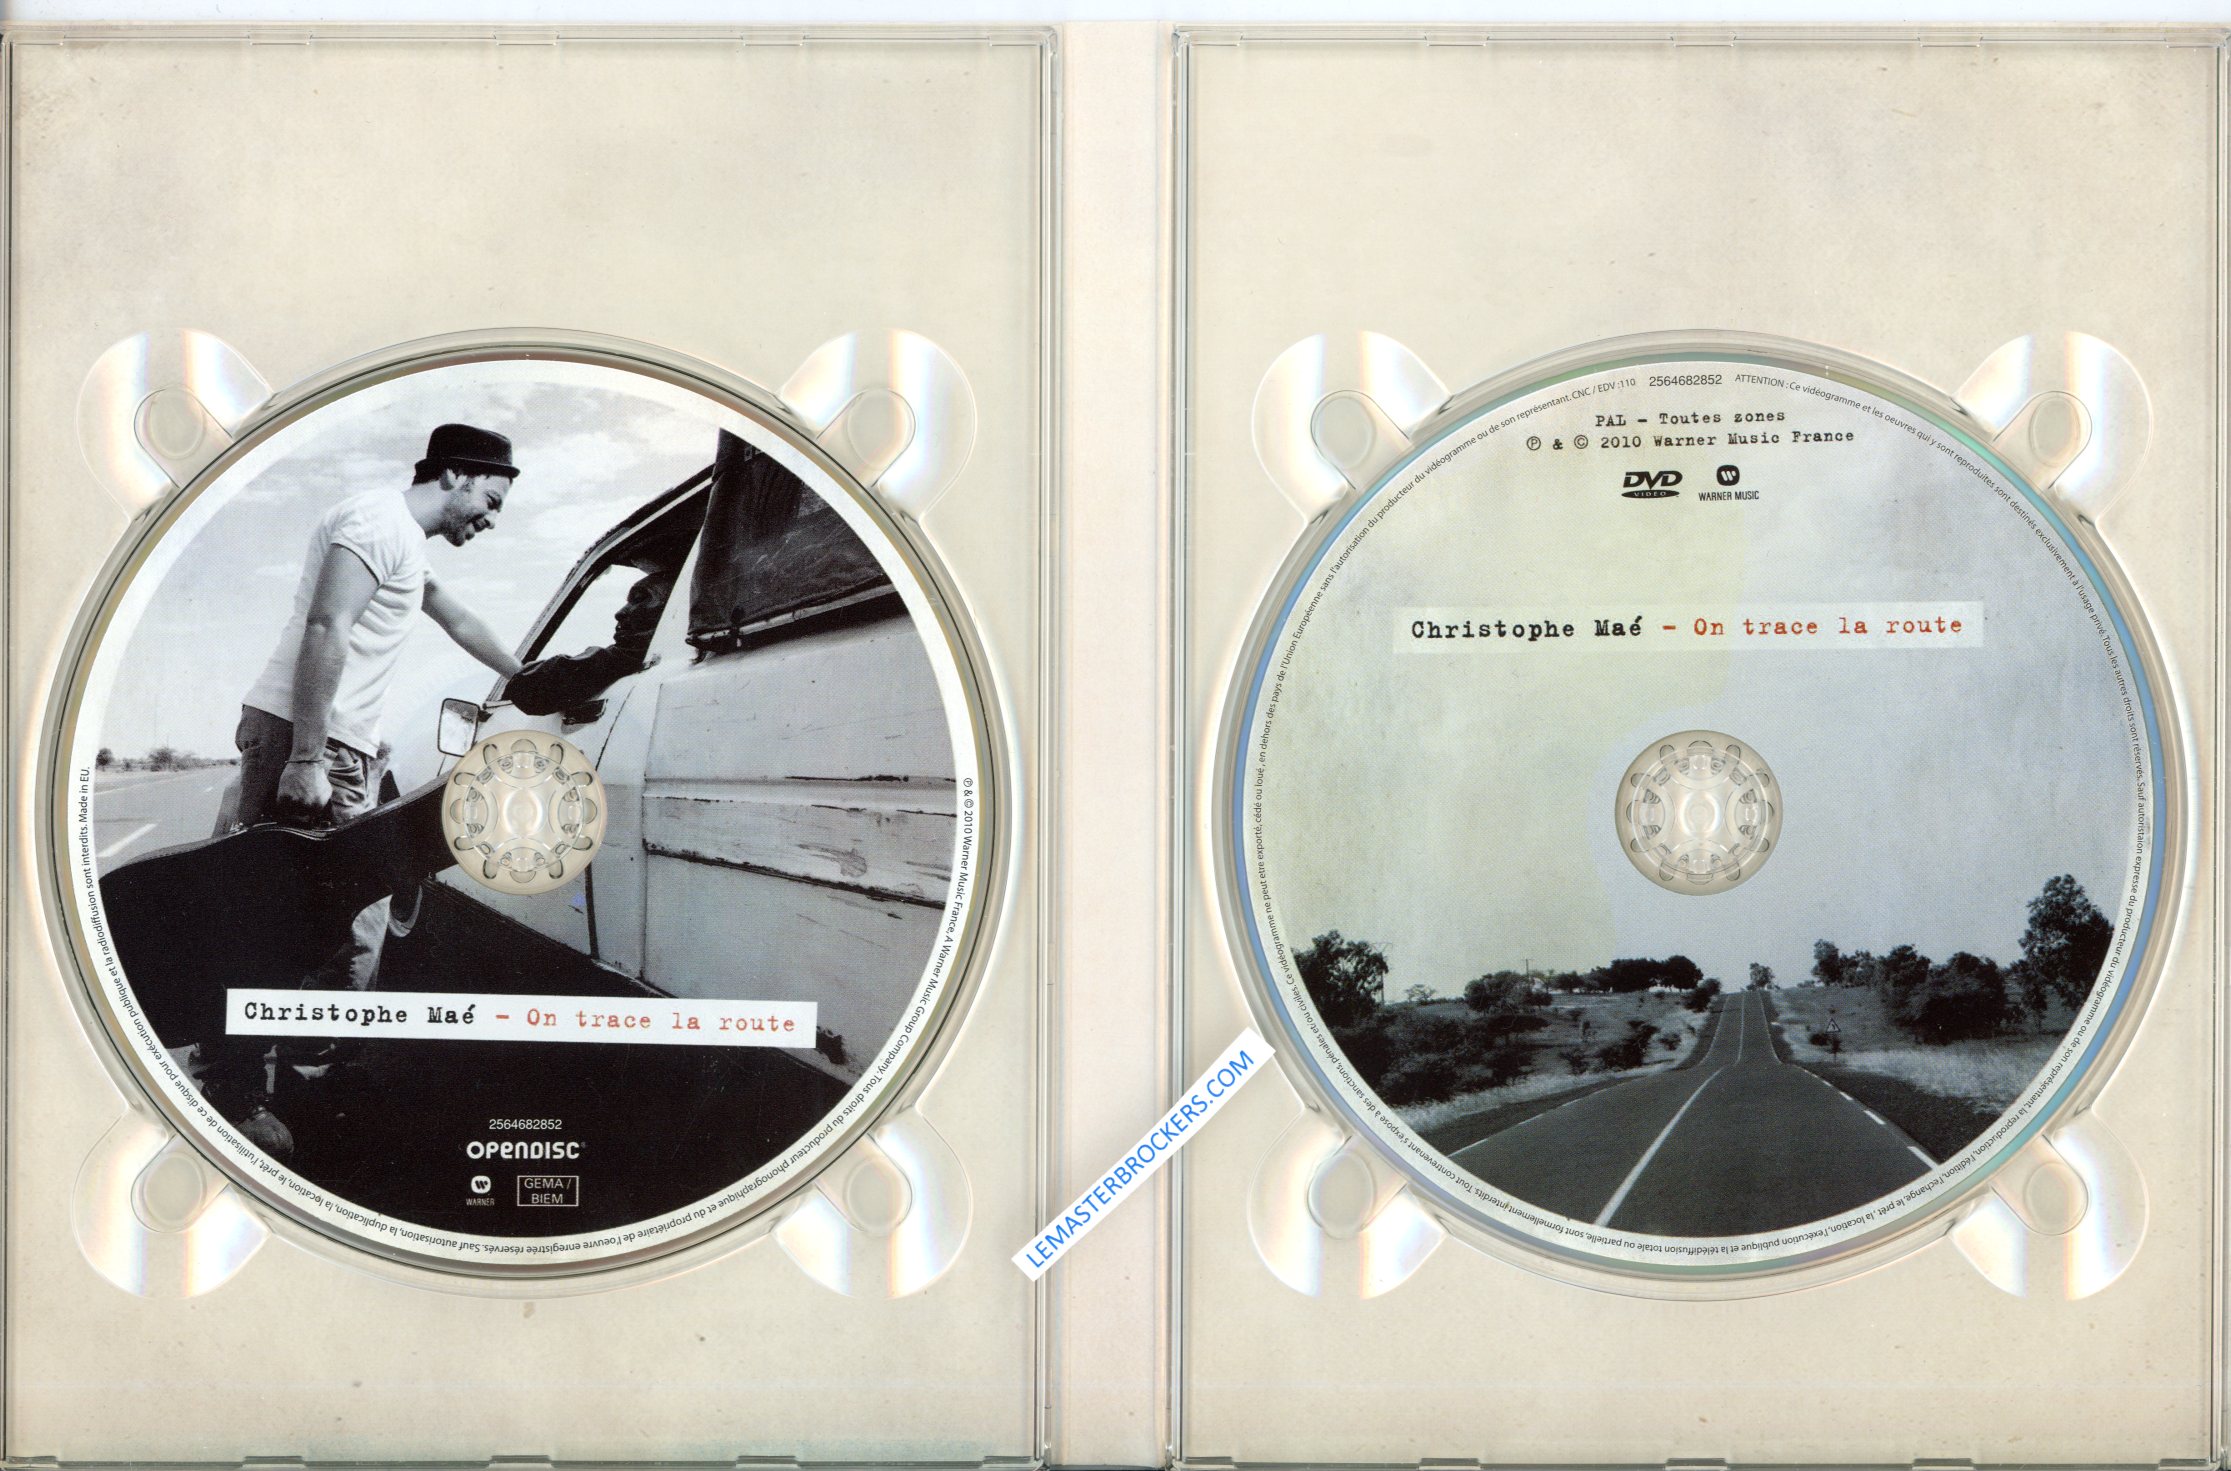 CHRISTOPHE MAÉ ALBUM CD AVEC DVD BONUS